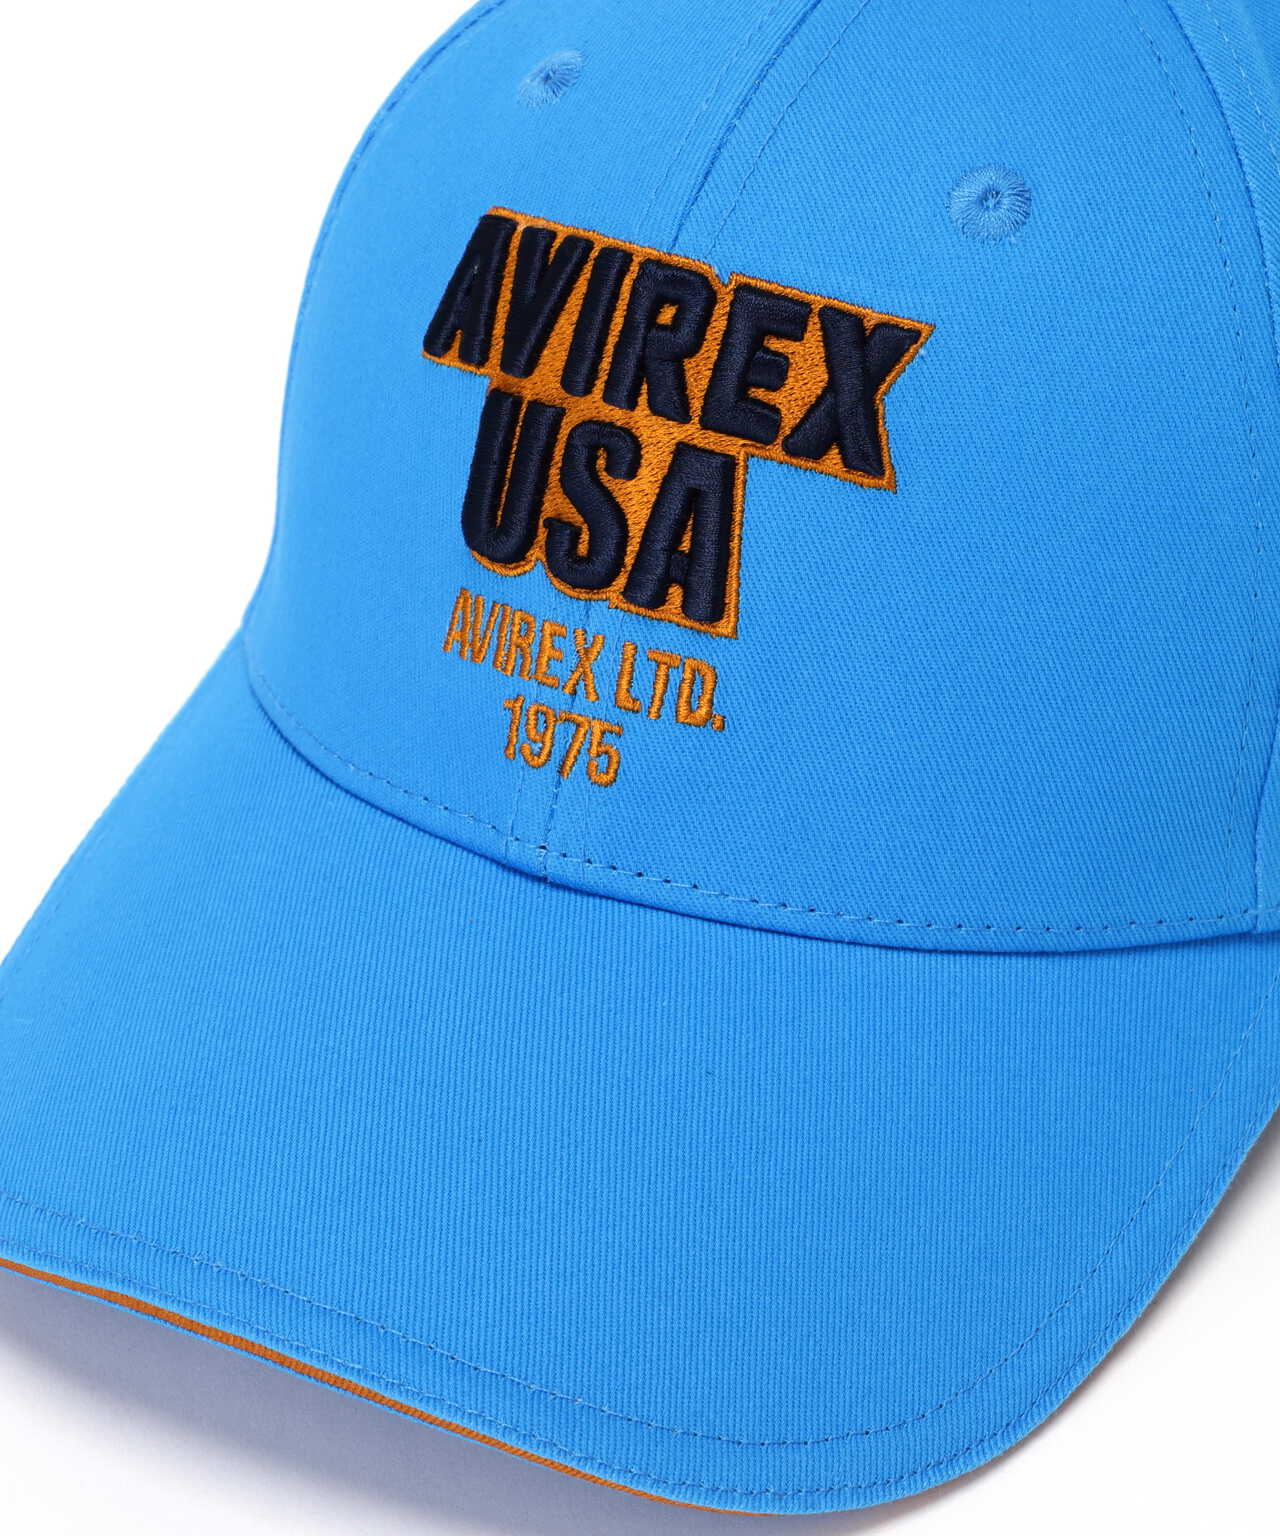 GOLF WEAR》AVIREX USA キャップ/ AVIREX USA CAP / アヴィレックス